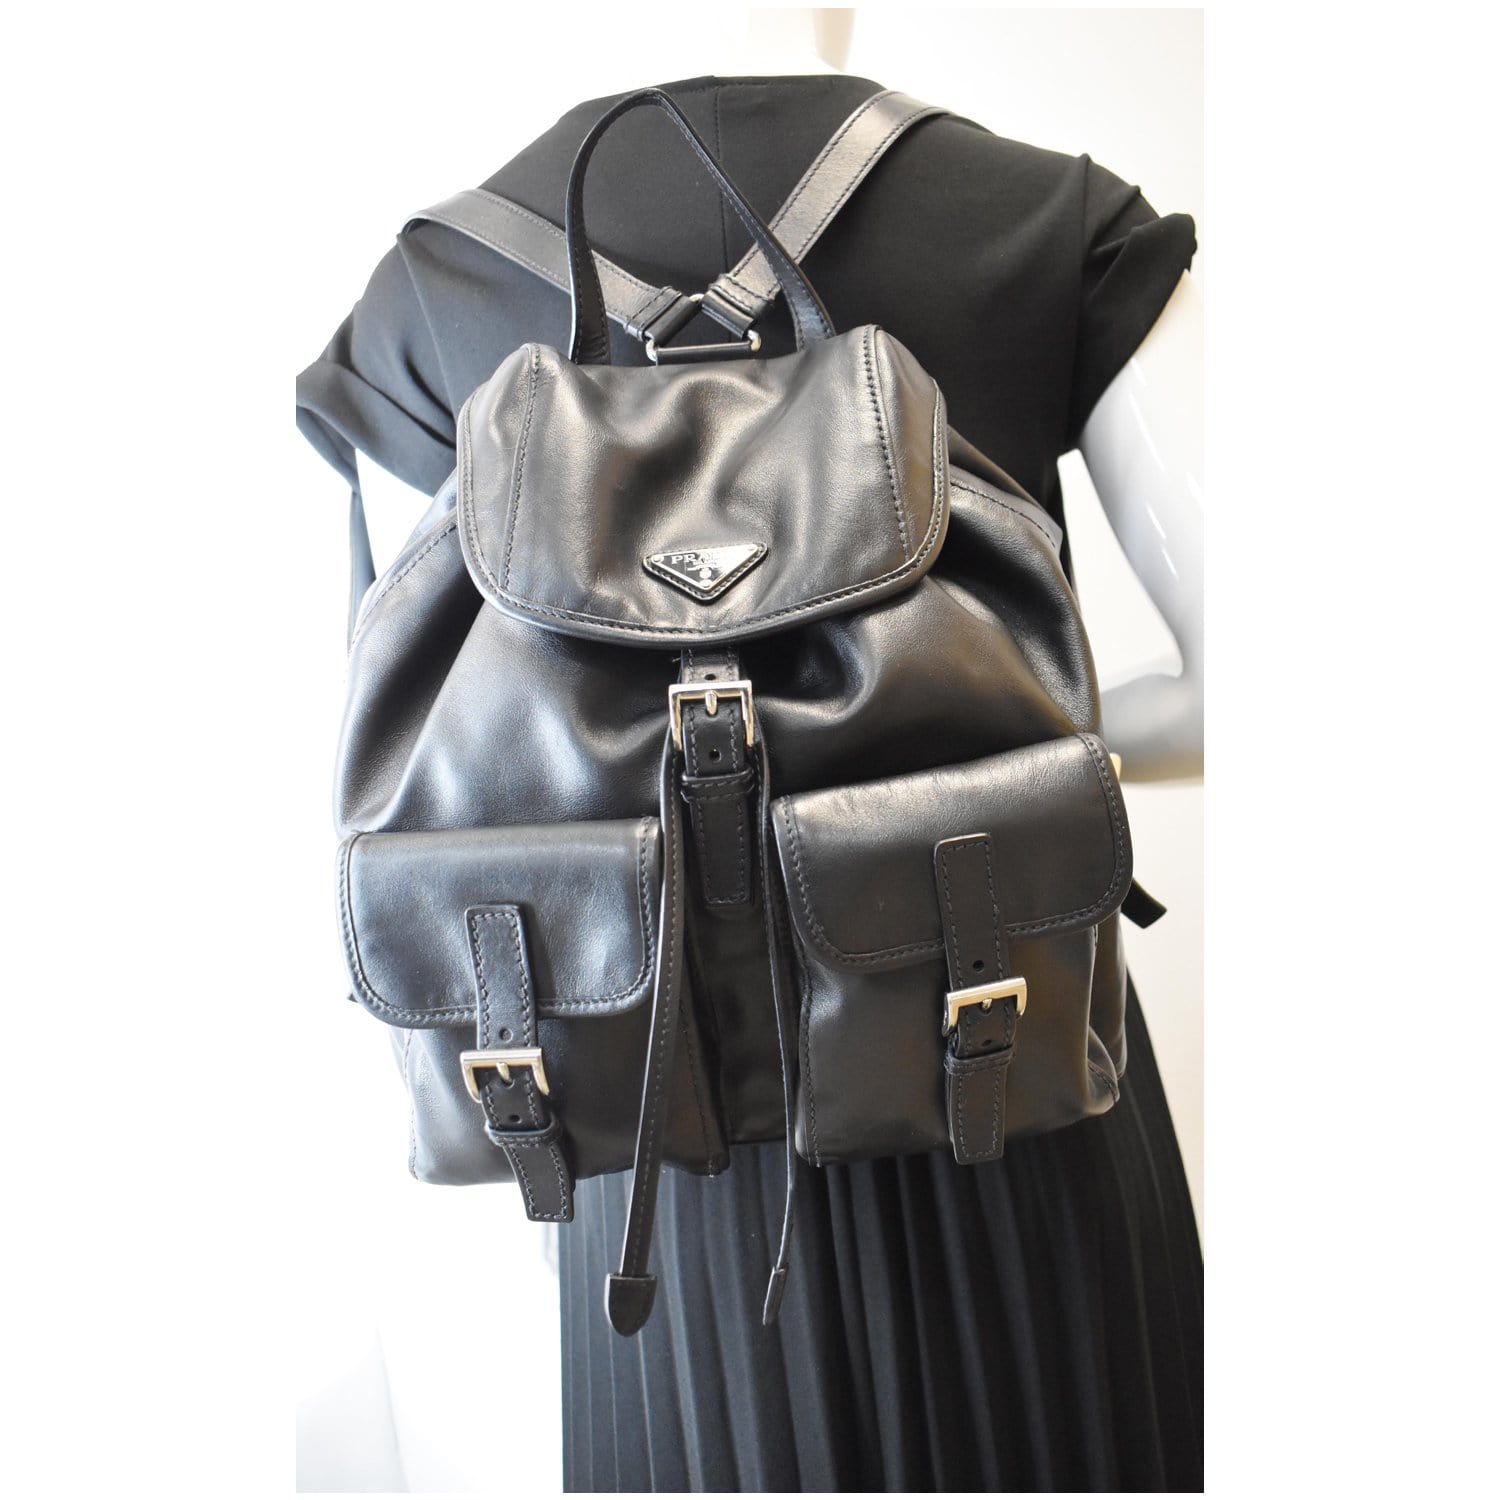 leather backpack black